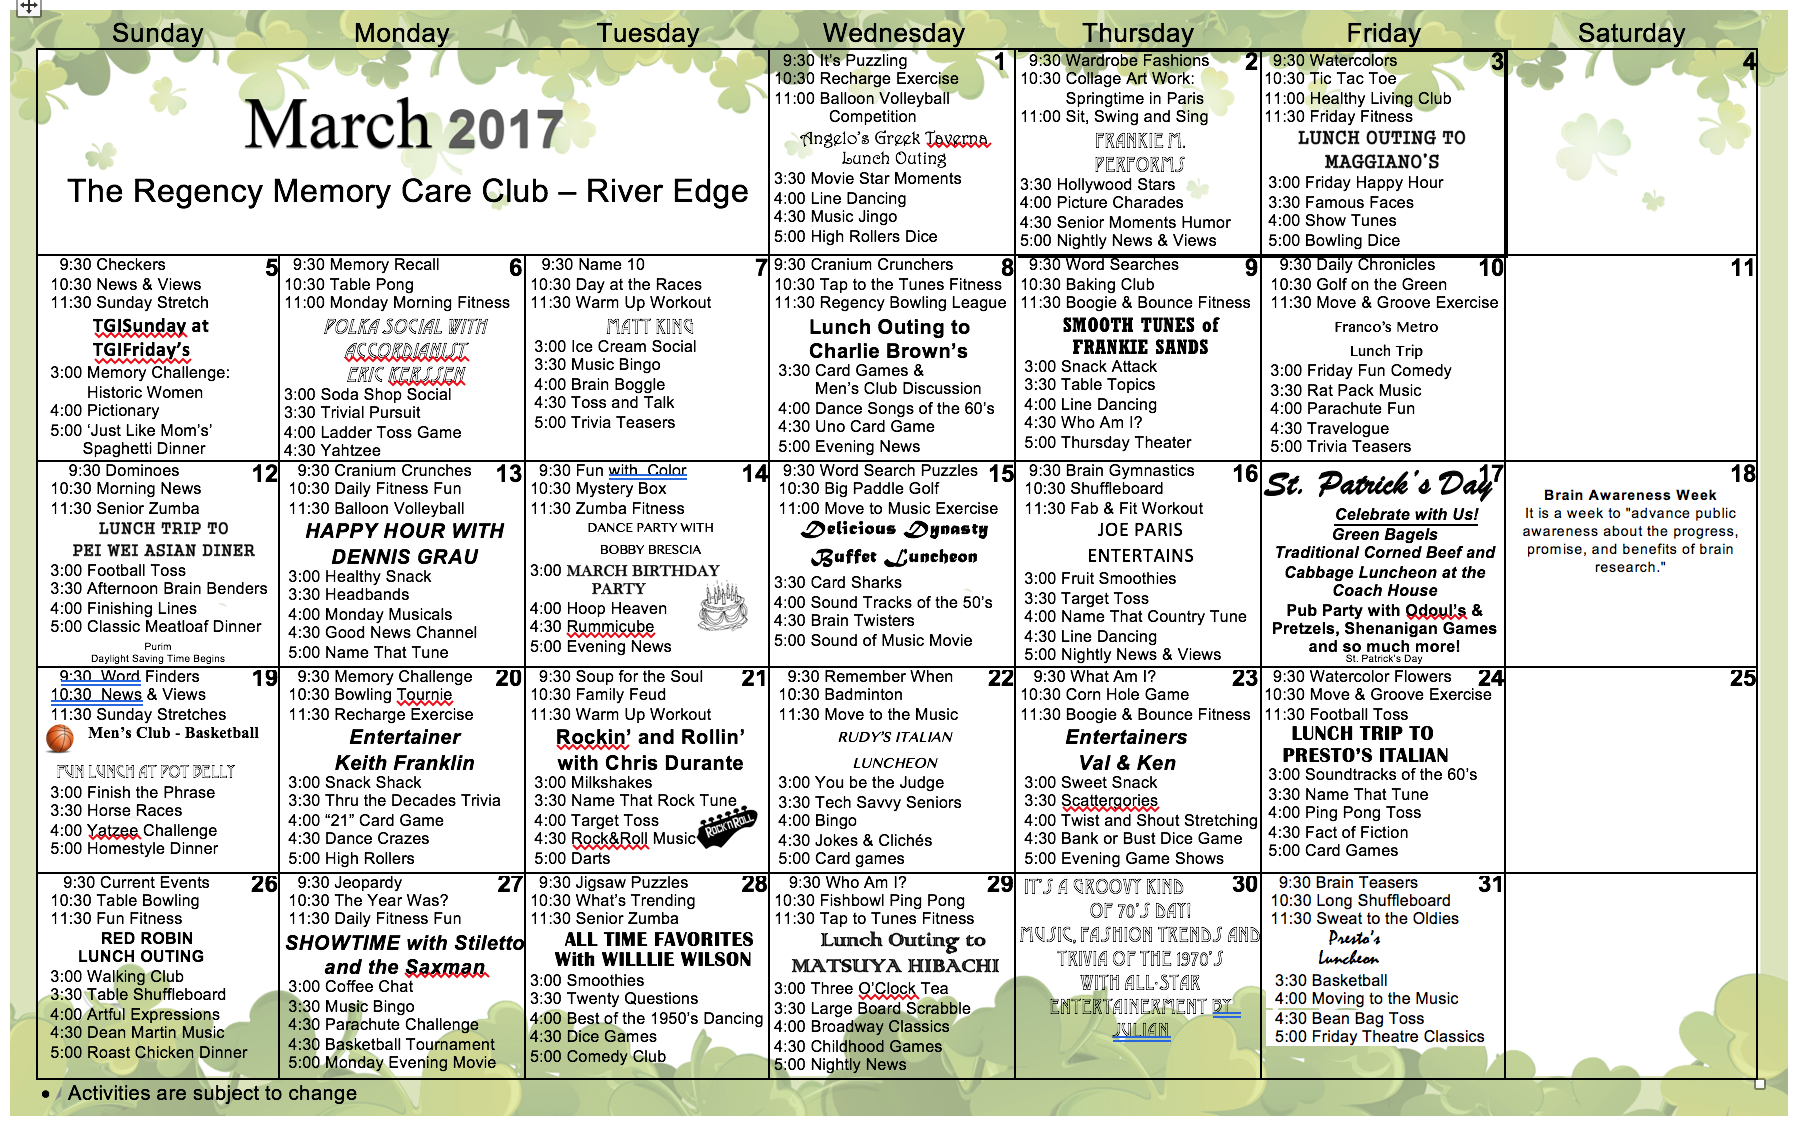 River Edge March 2017 Events